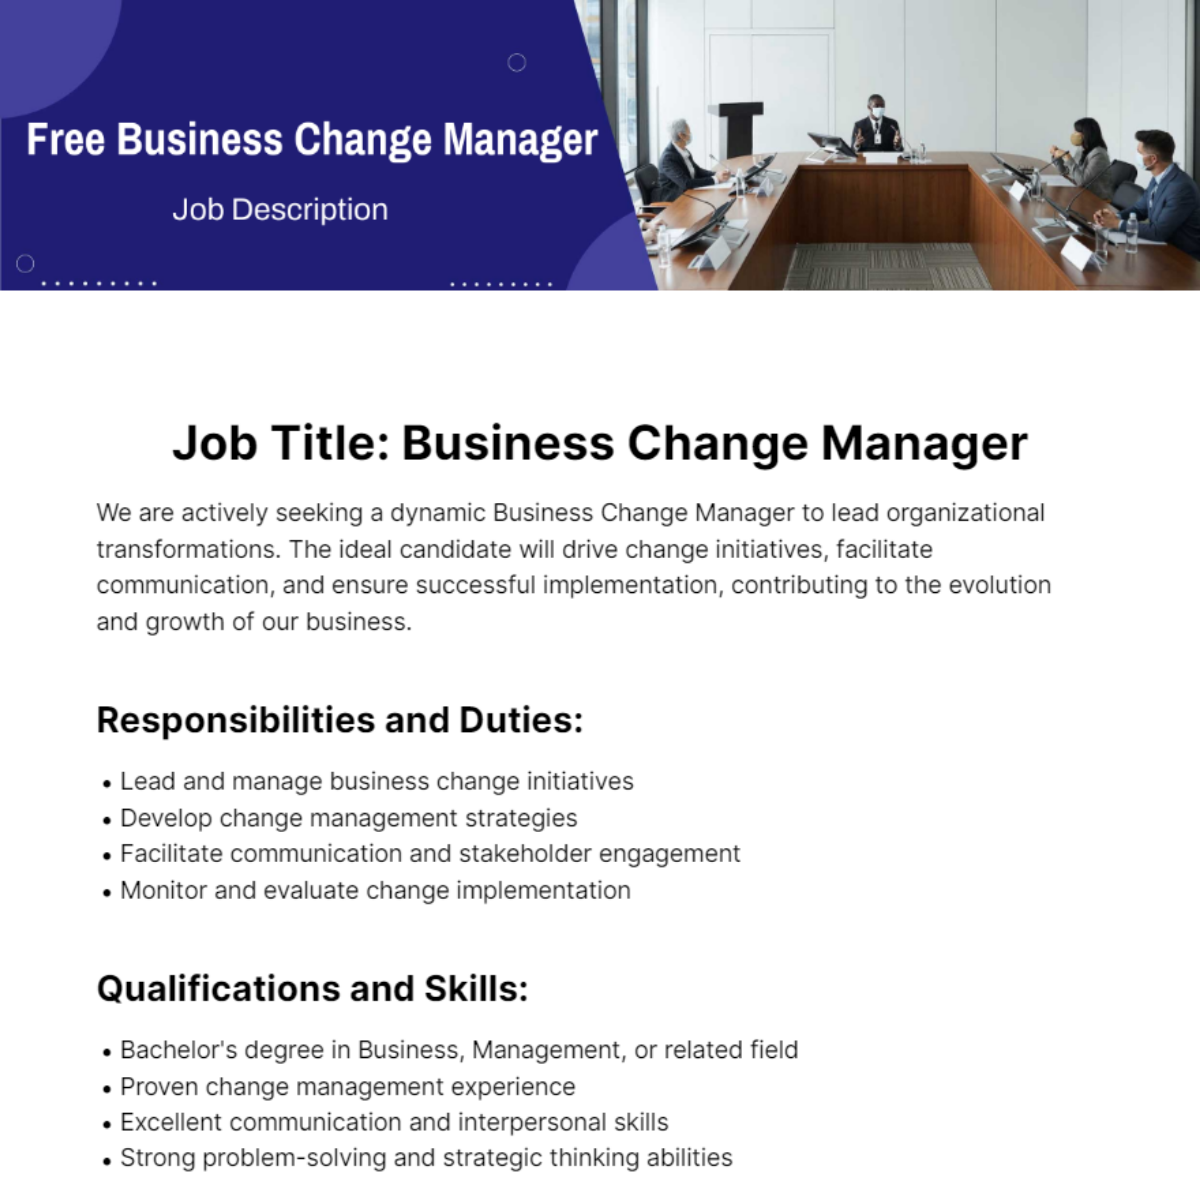 Free Business Change Manager Job Description Template